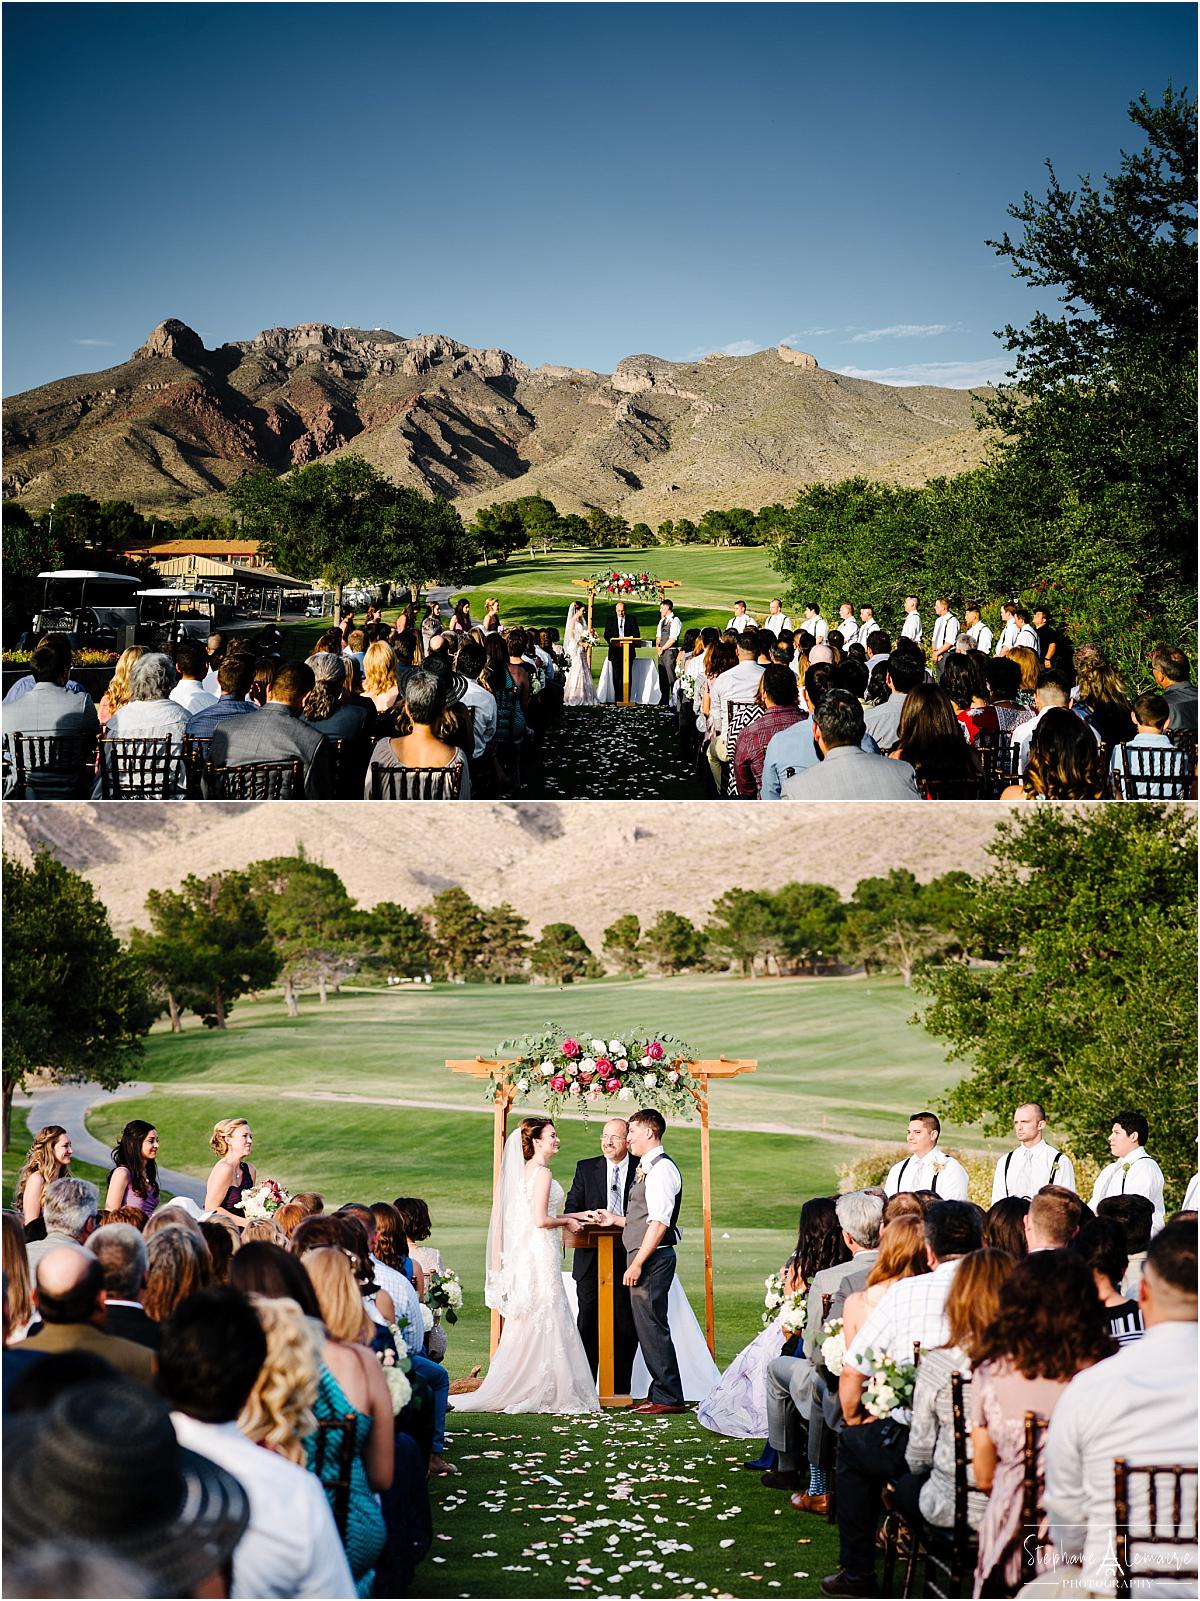 wedding ceremony at Coronado country club wedding venue in el paso texas by stephane lemaire photography